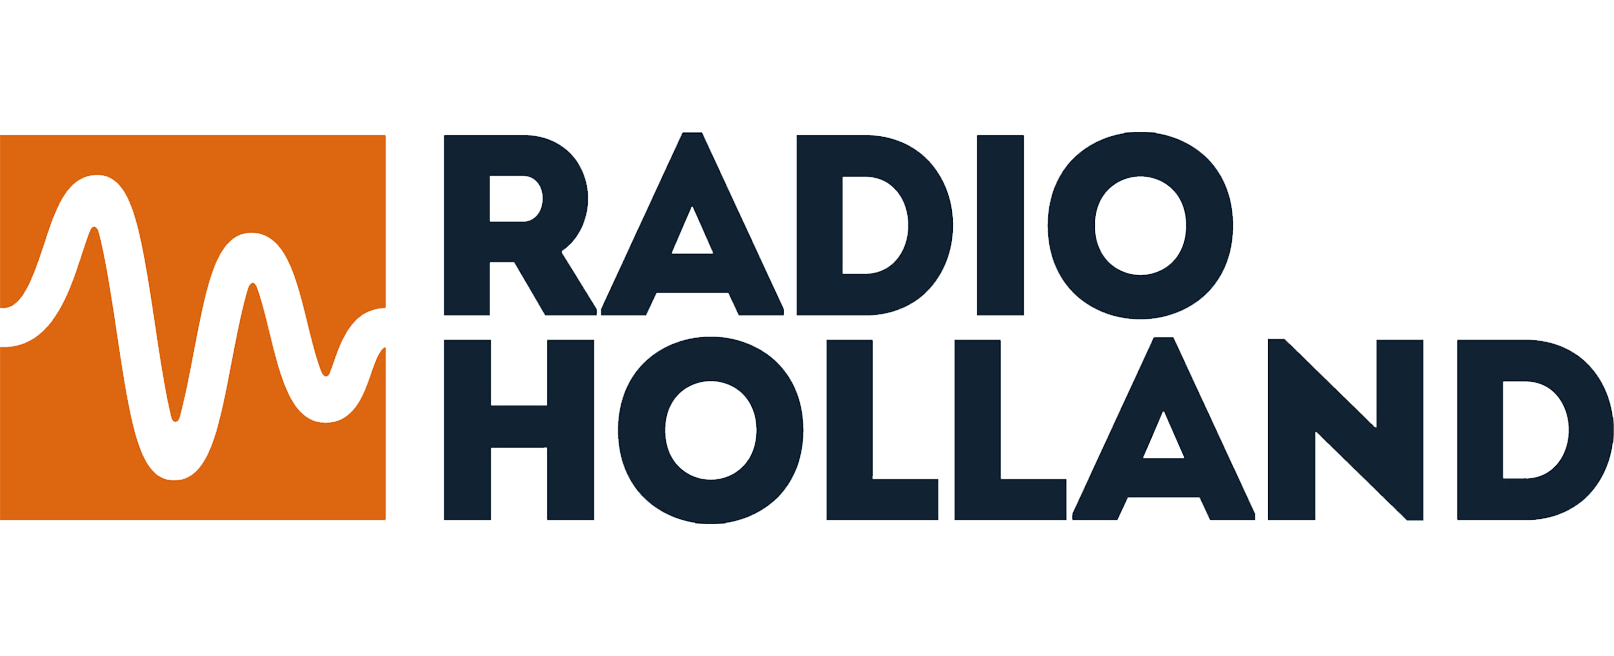 radio holland